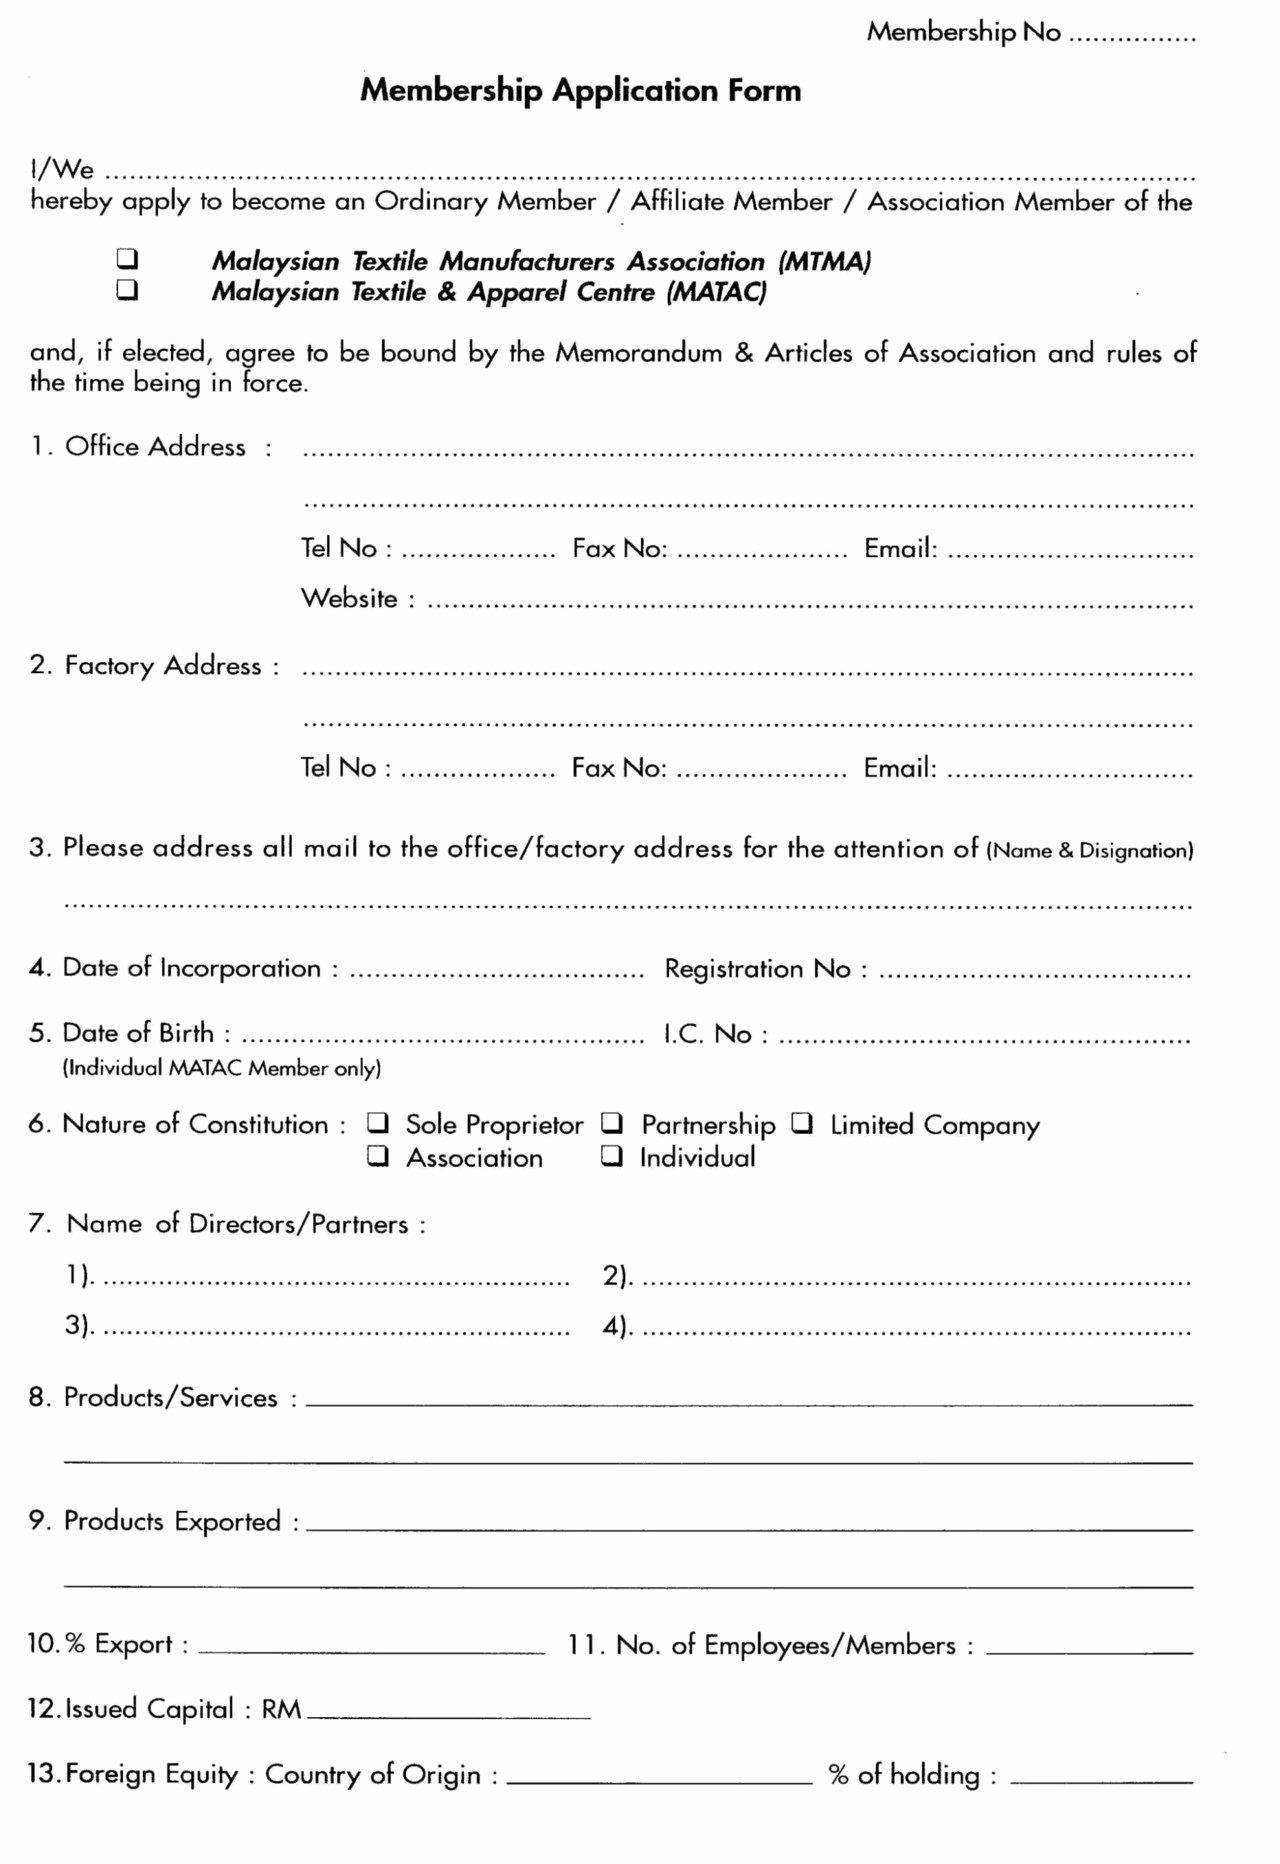 membership application form sample inspirational association association membership form template